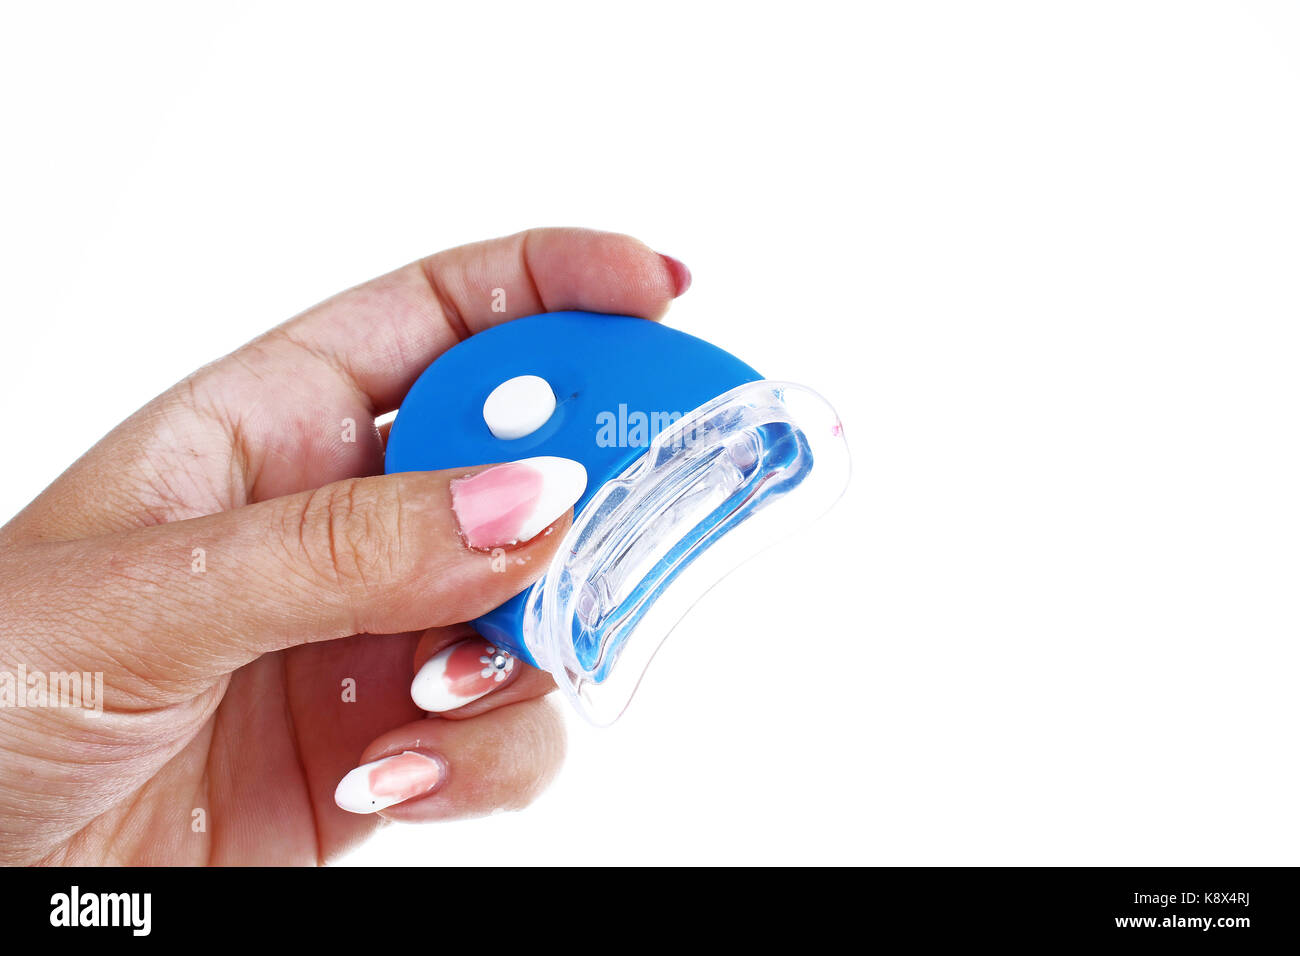 Teeth whitening home kit LED lamp uv light in woman's hand. Stock Photo